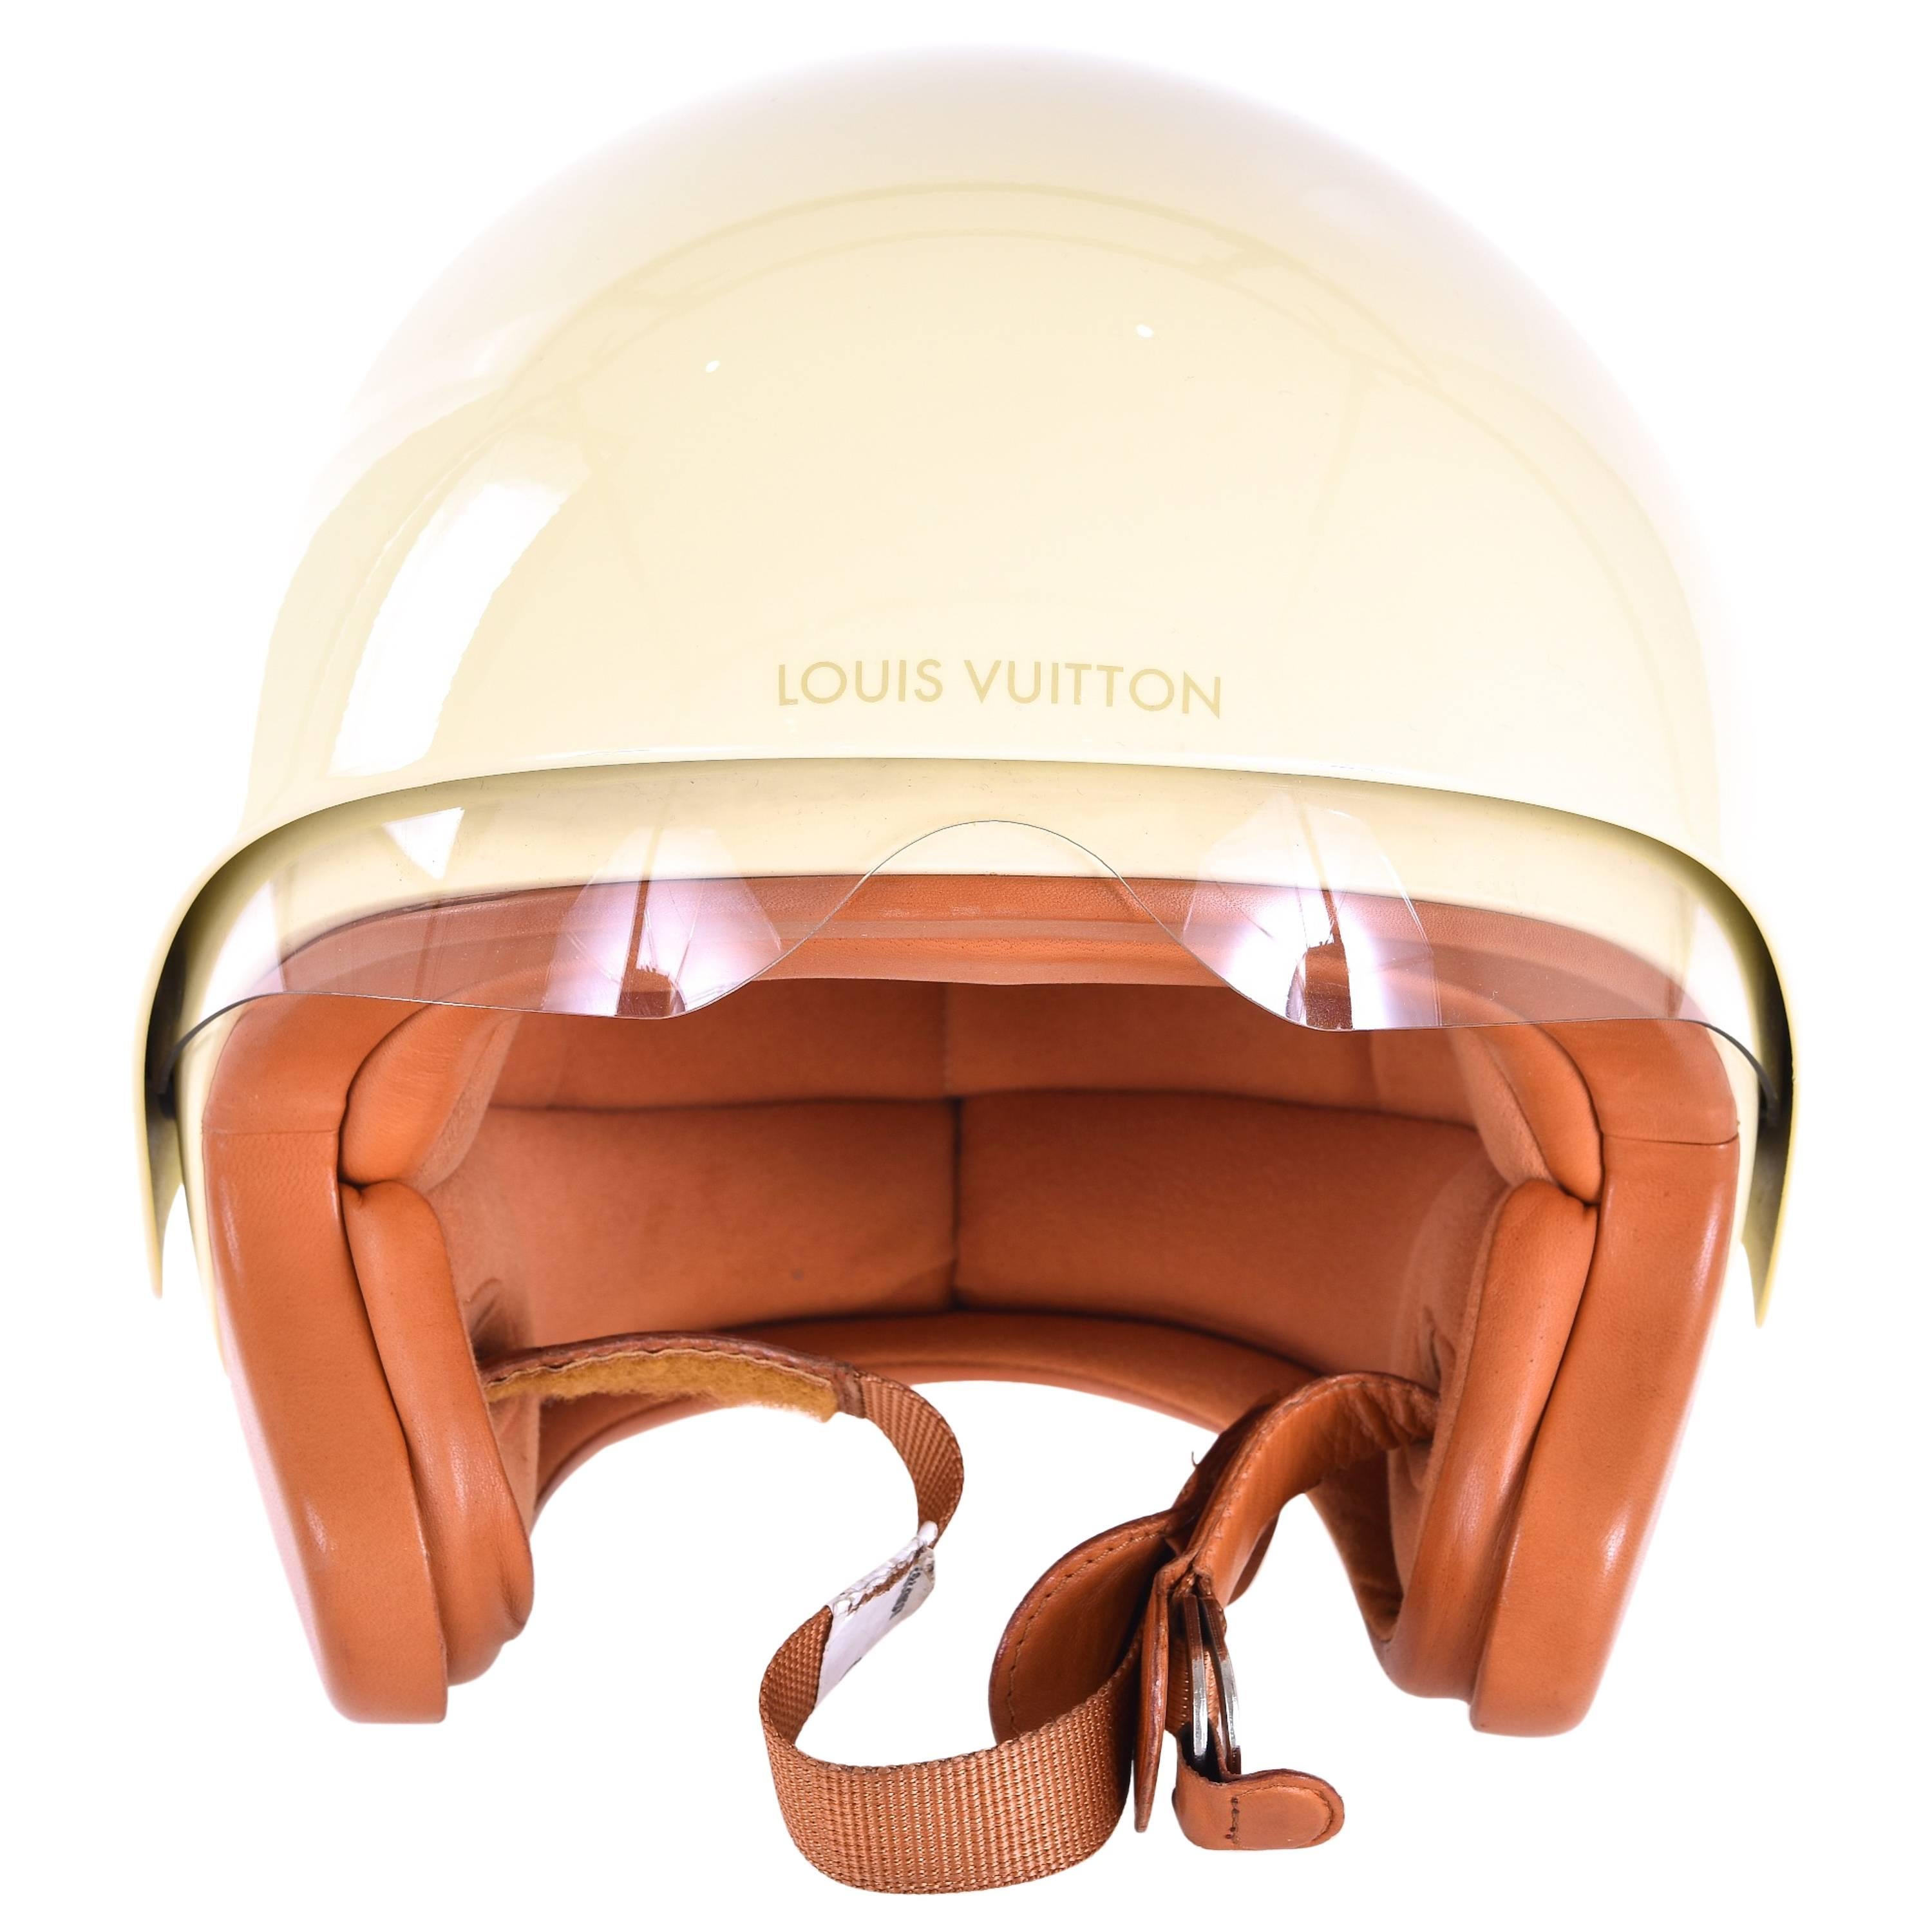 Louis Vuitton Limited Edition Damier Beige Motorrad Vespa Helm Jane Finds